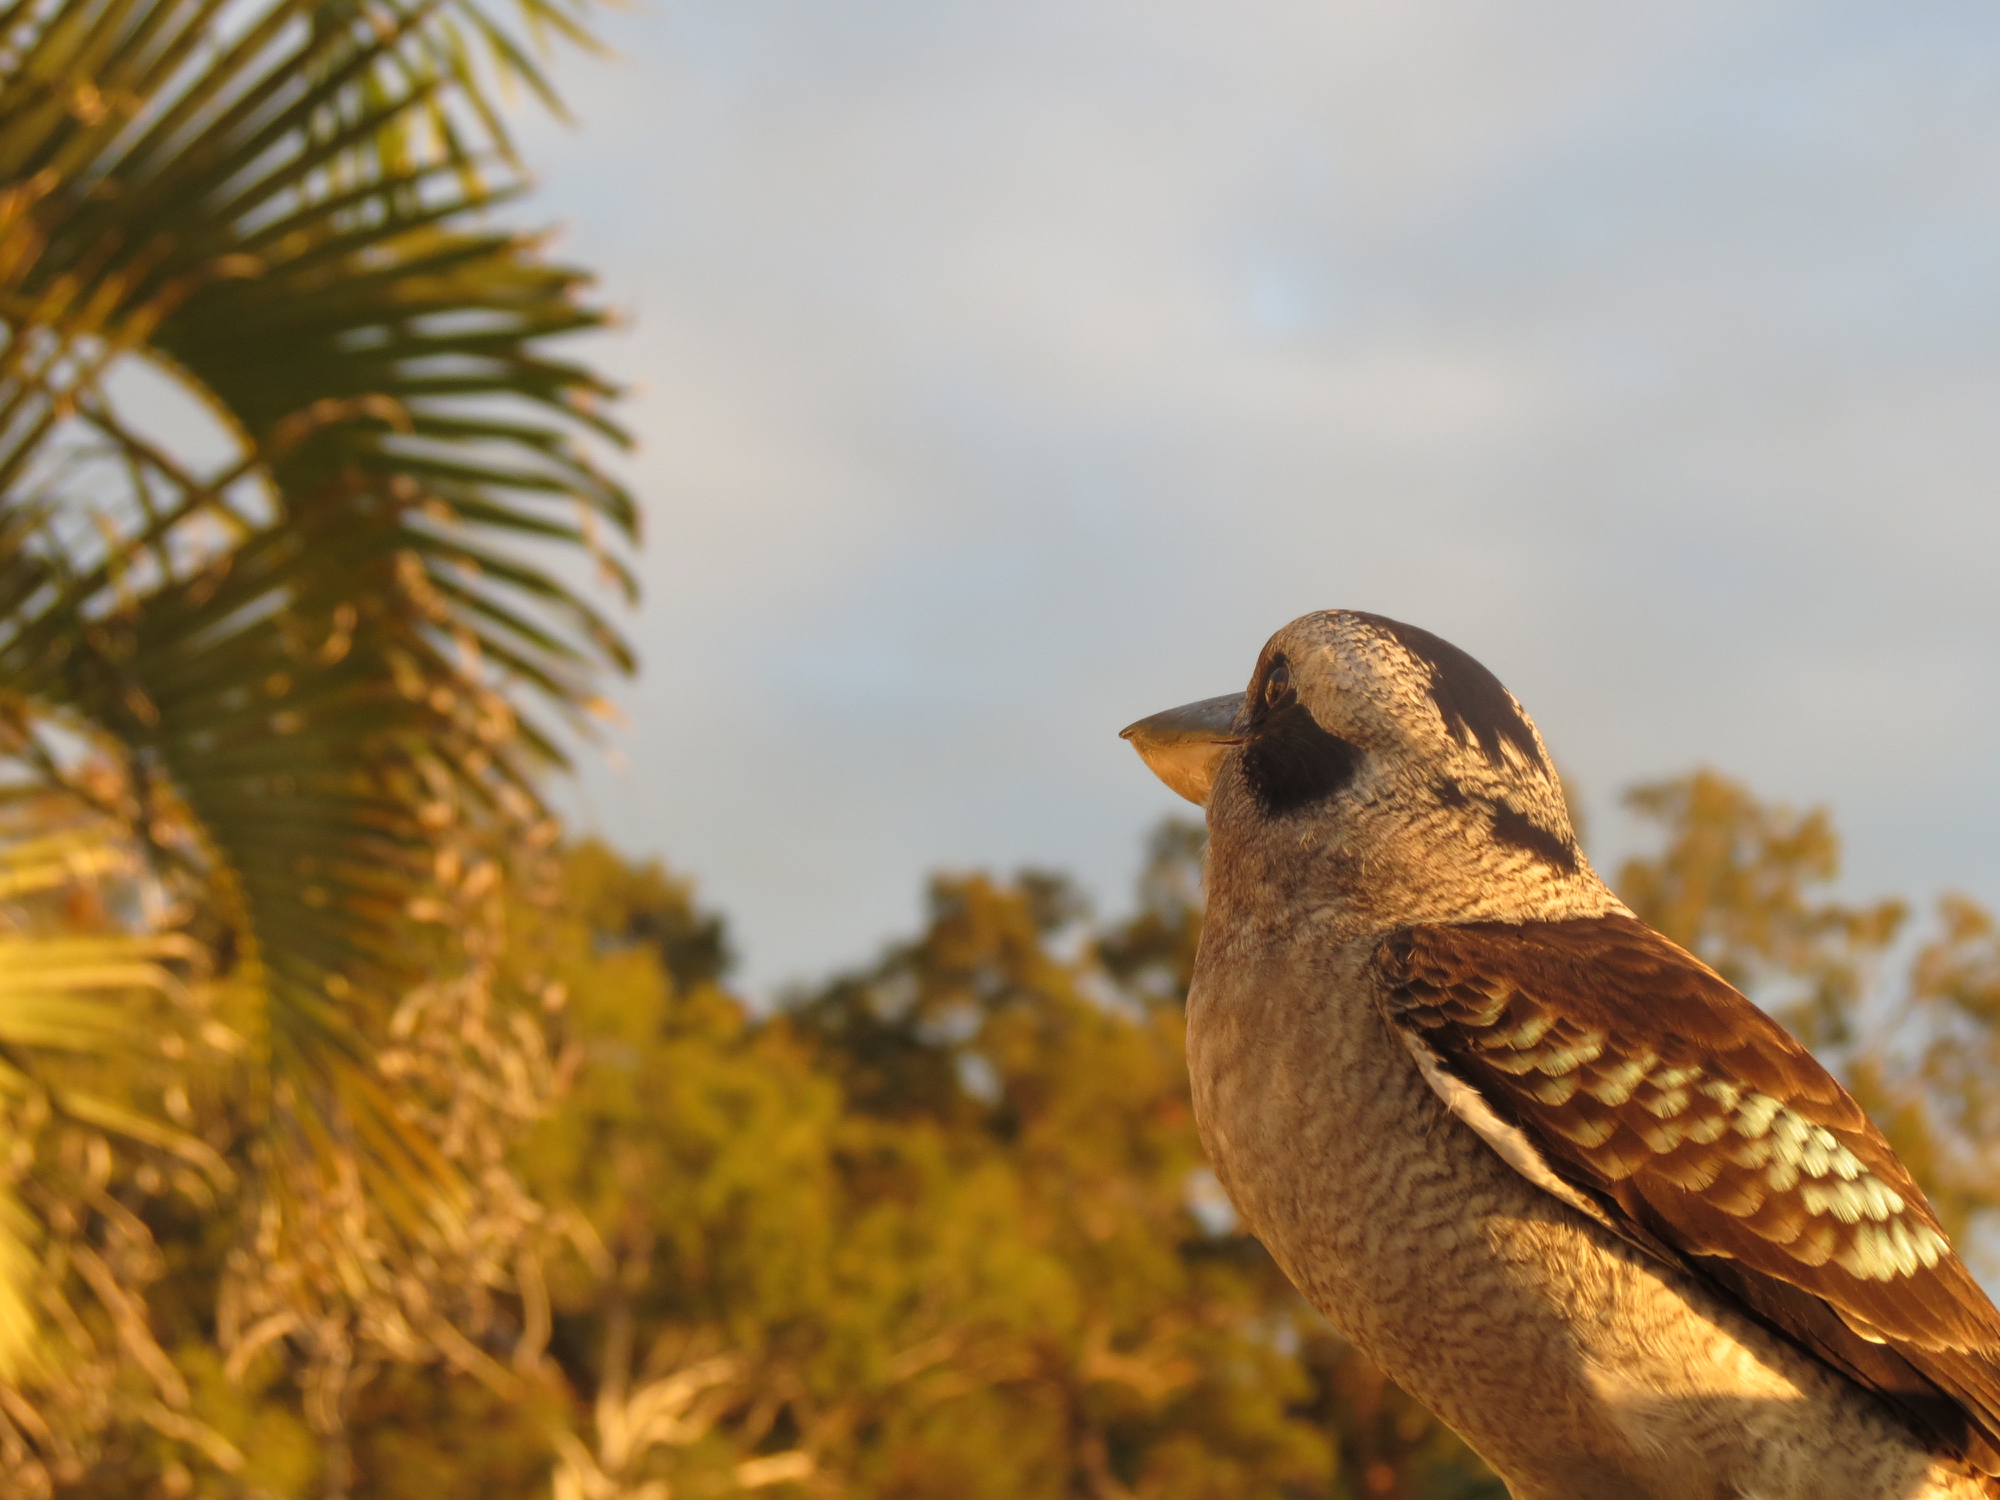 Kookaburra Freeding, Tangalooma Island Resort, Moreton Island, Queensland